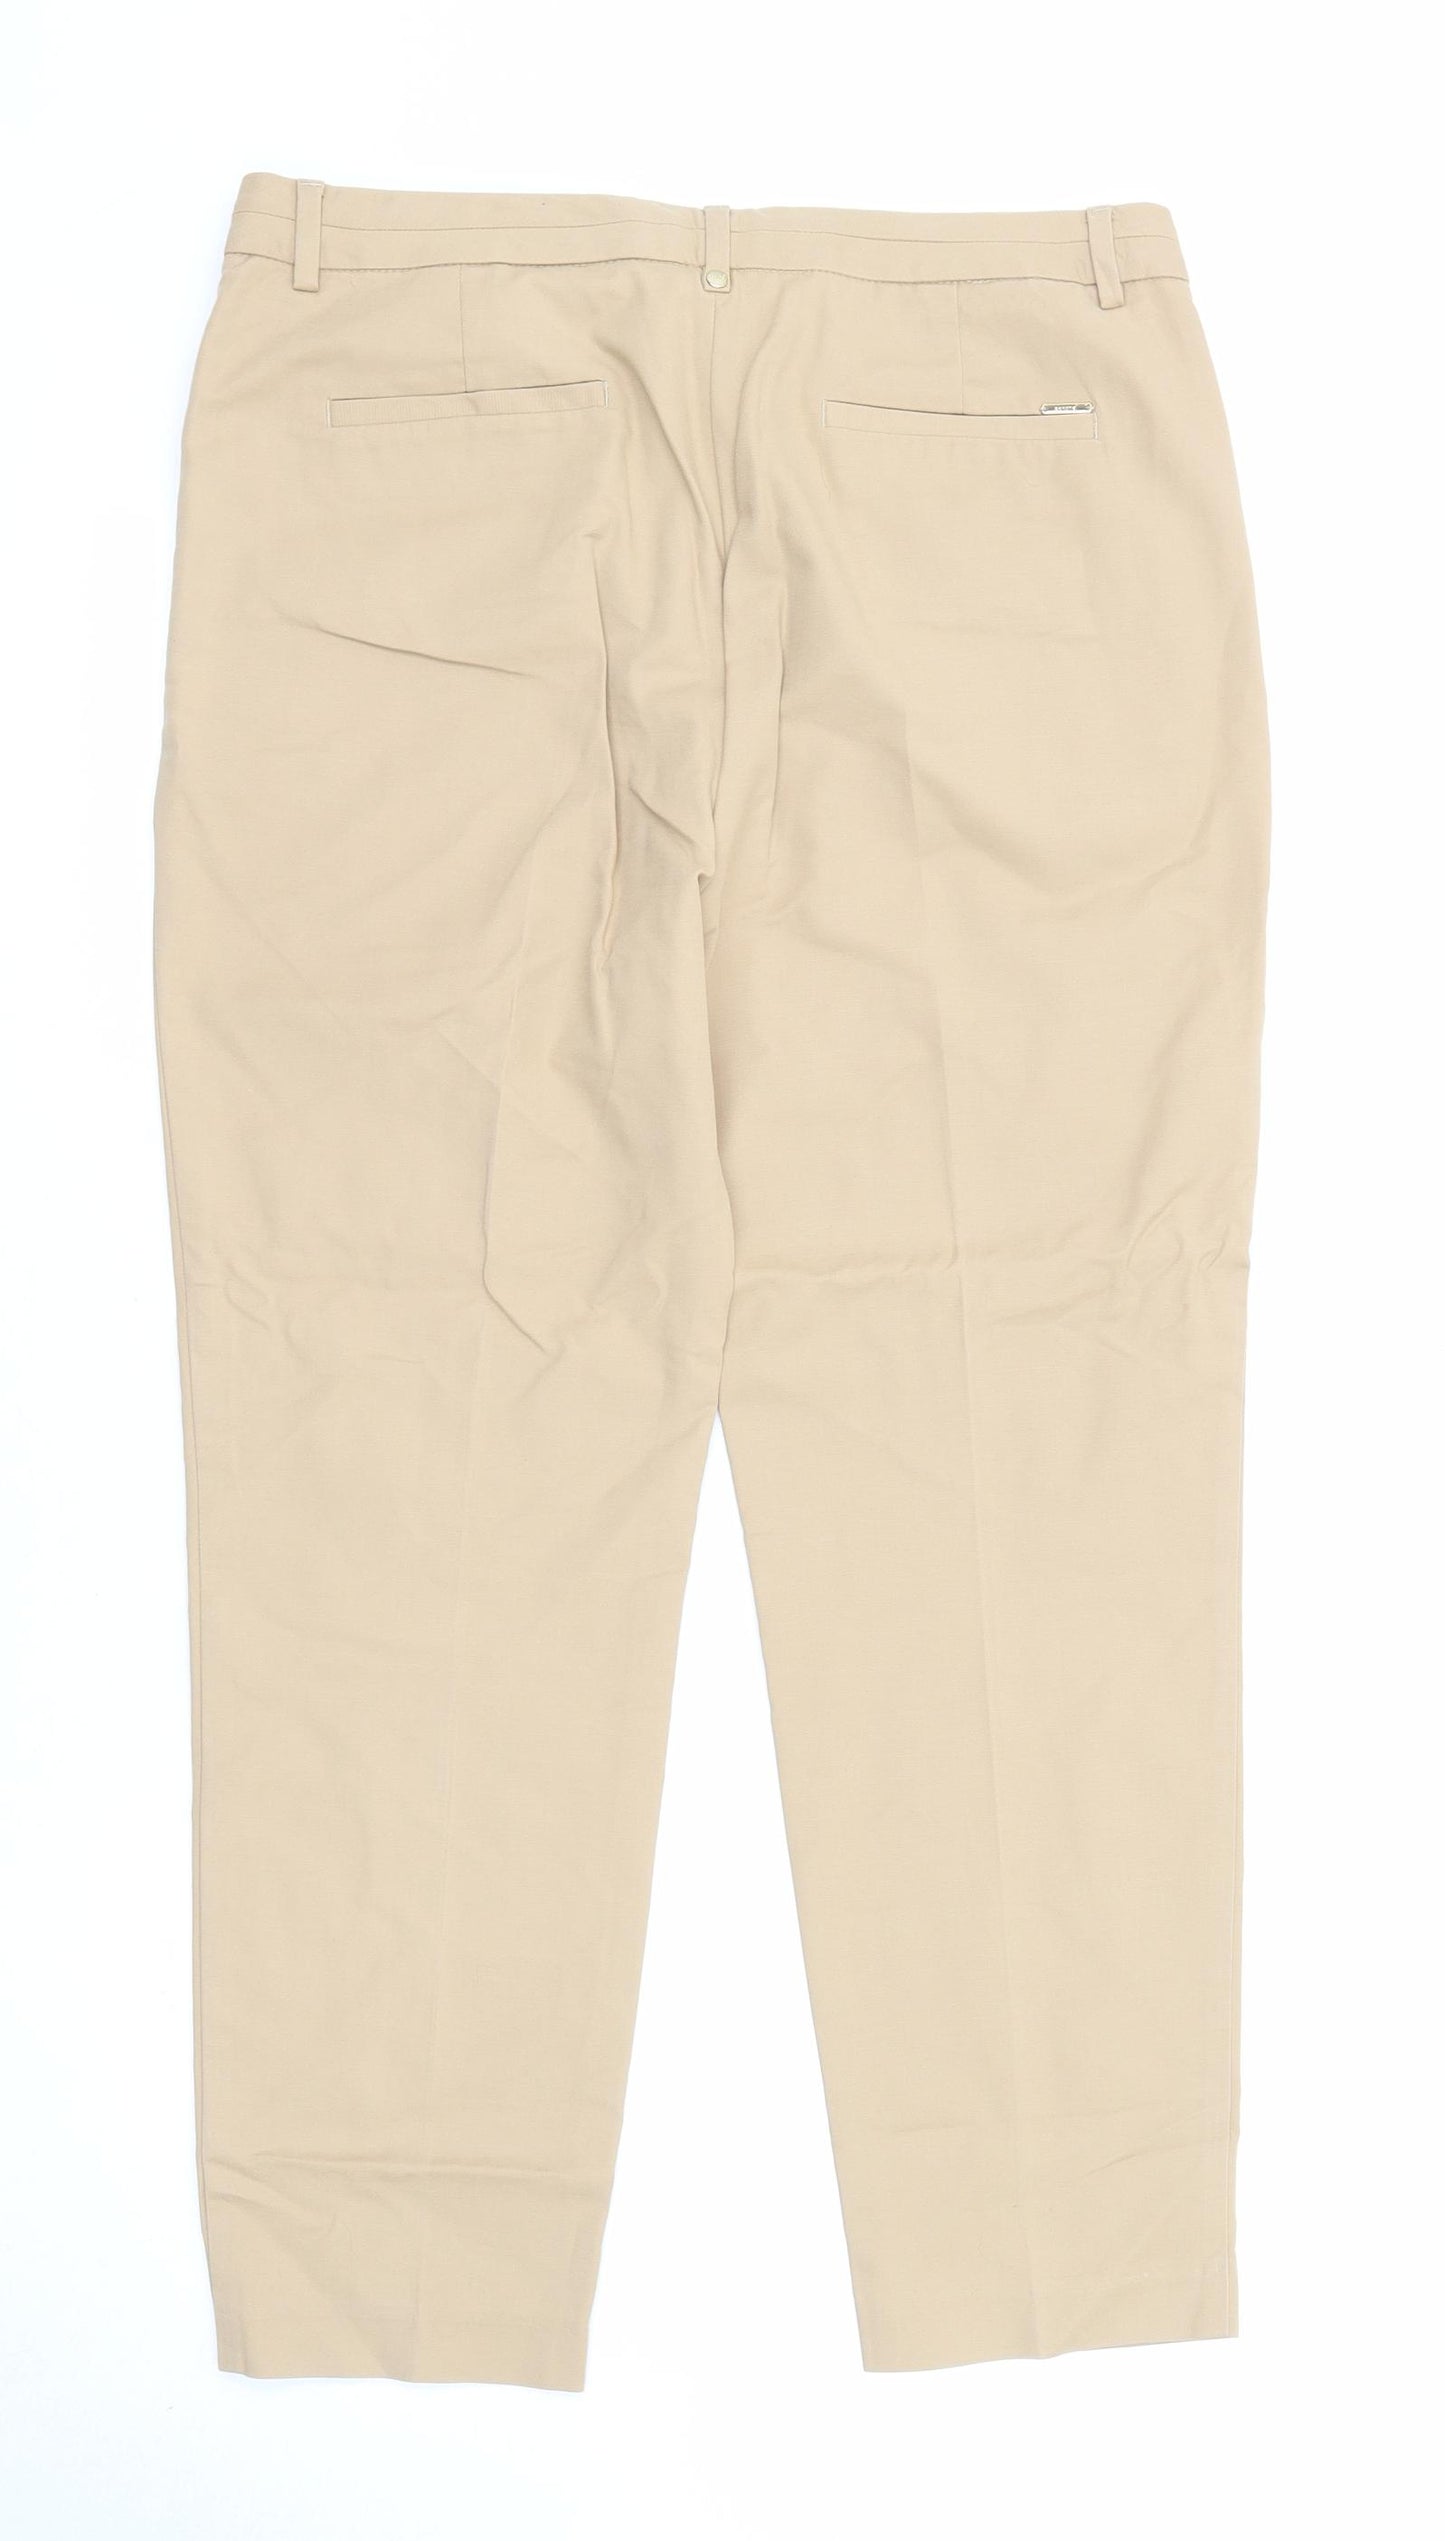 Per Una Womens Beige Cotton Chino Trousers Size 12 L25 in Regular Zip